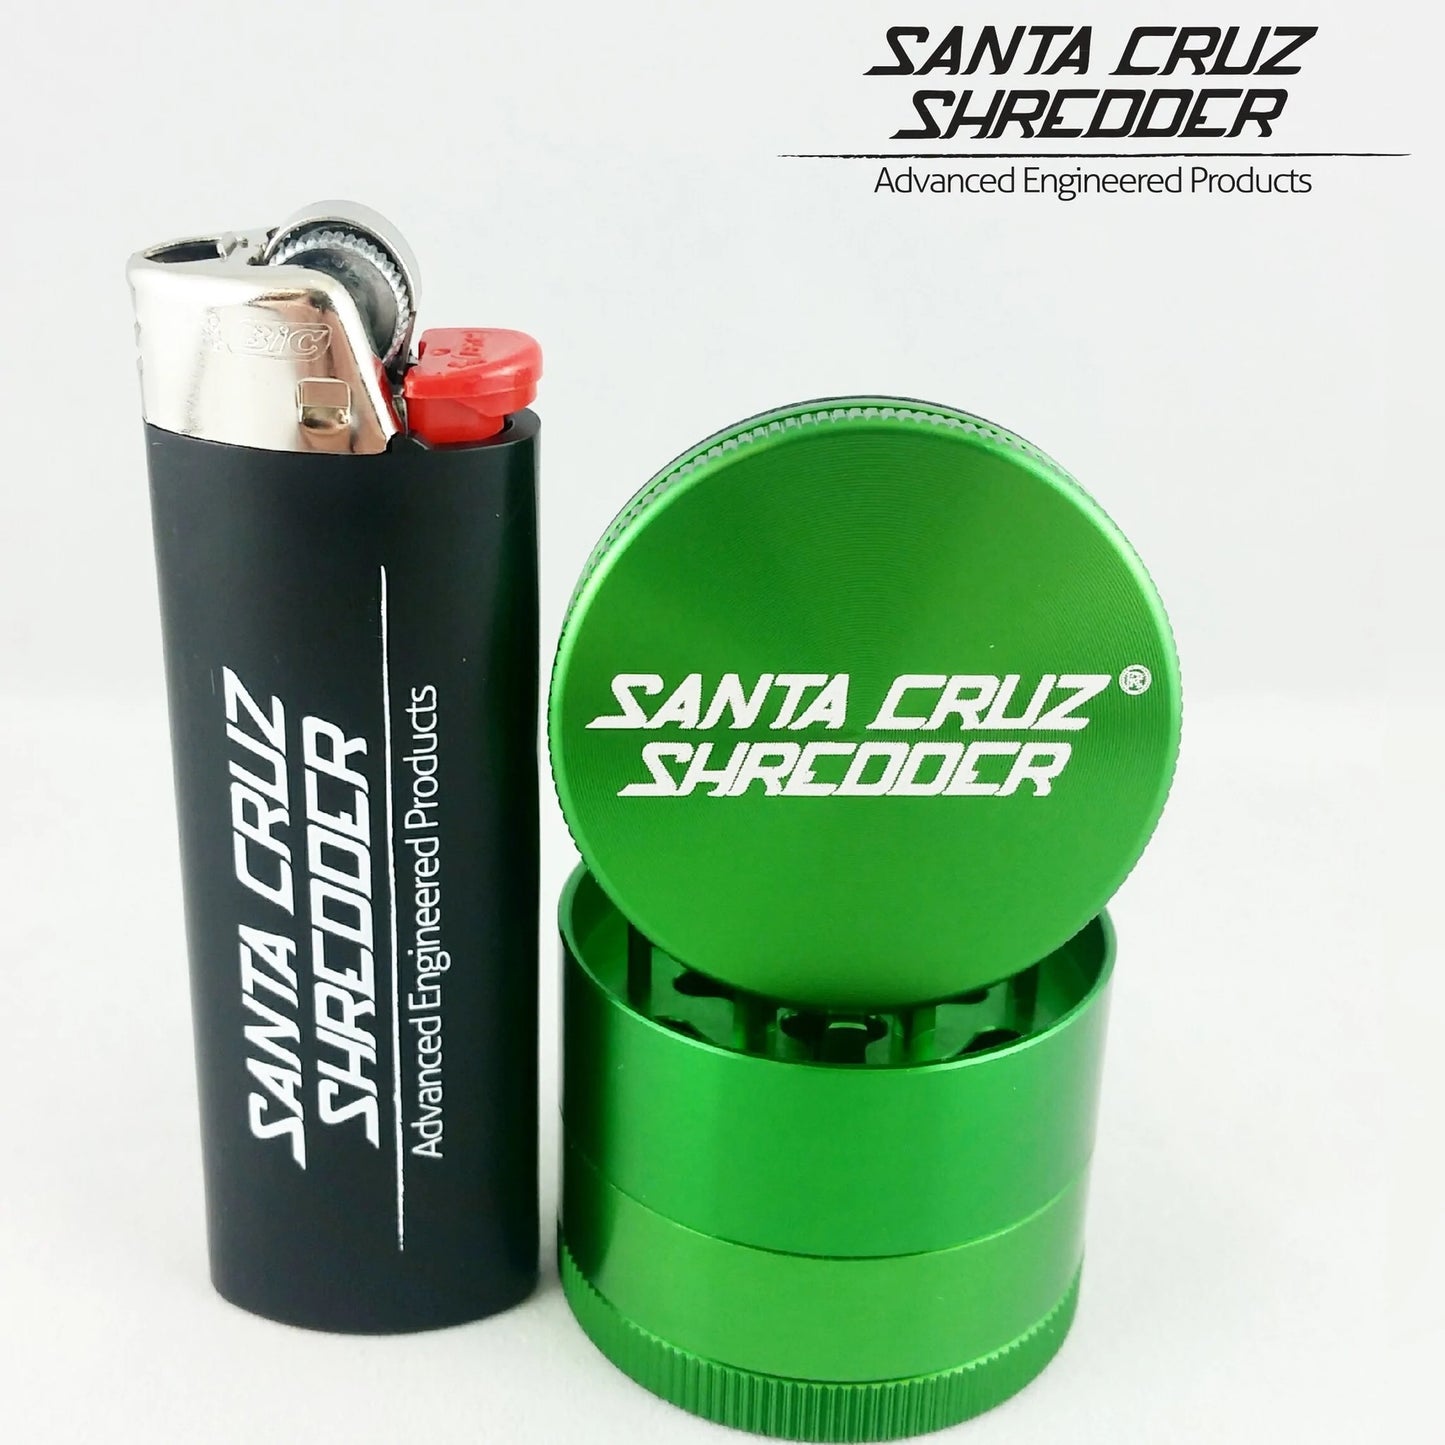 SANTA CRUZ SHREDDER 4 PIECE SMALL GREEN